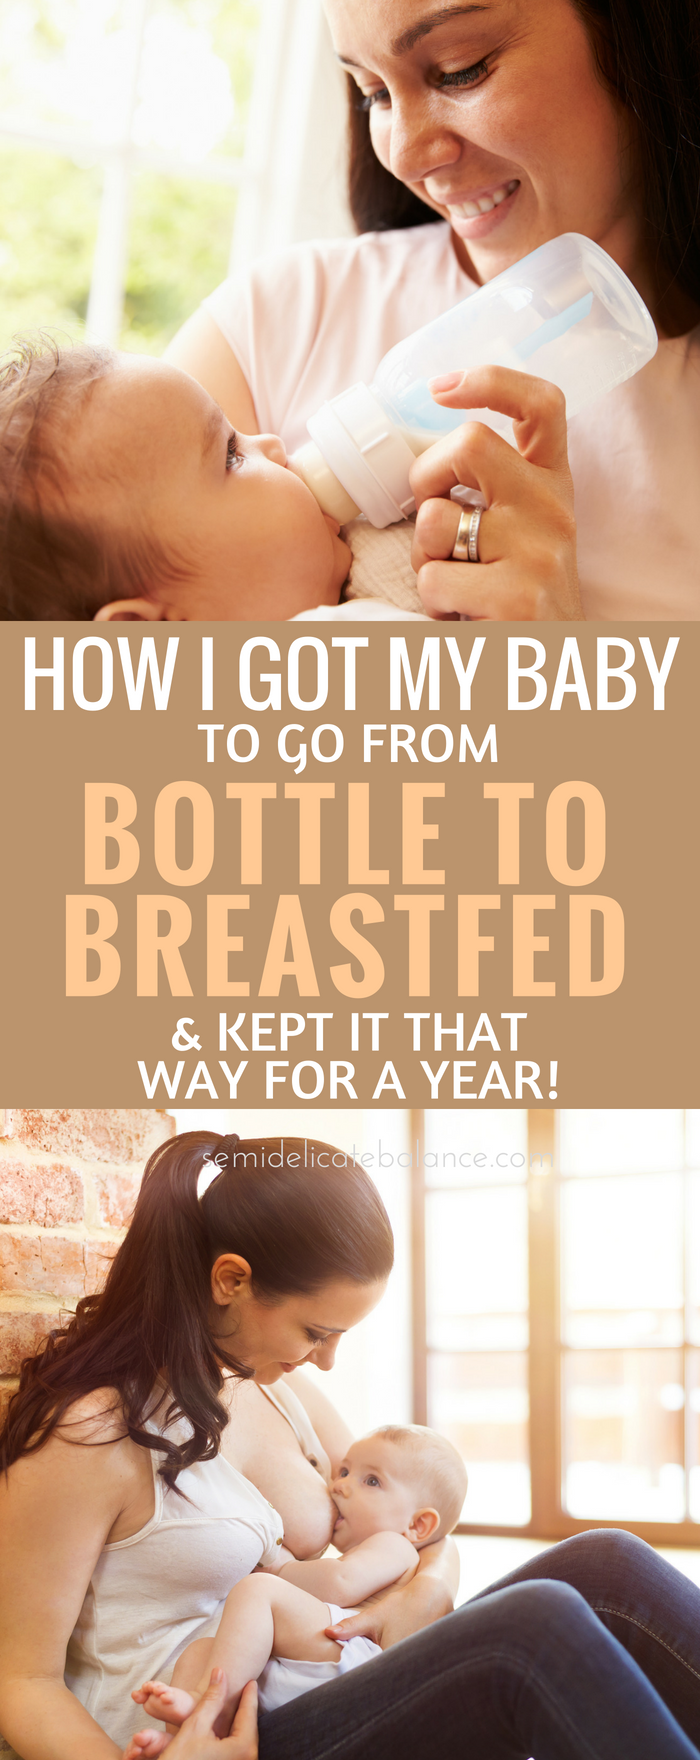 How I Got My Baby to Go From Bottle Back to Breastfed #breastfeeding #newmom